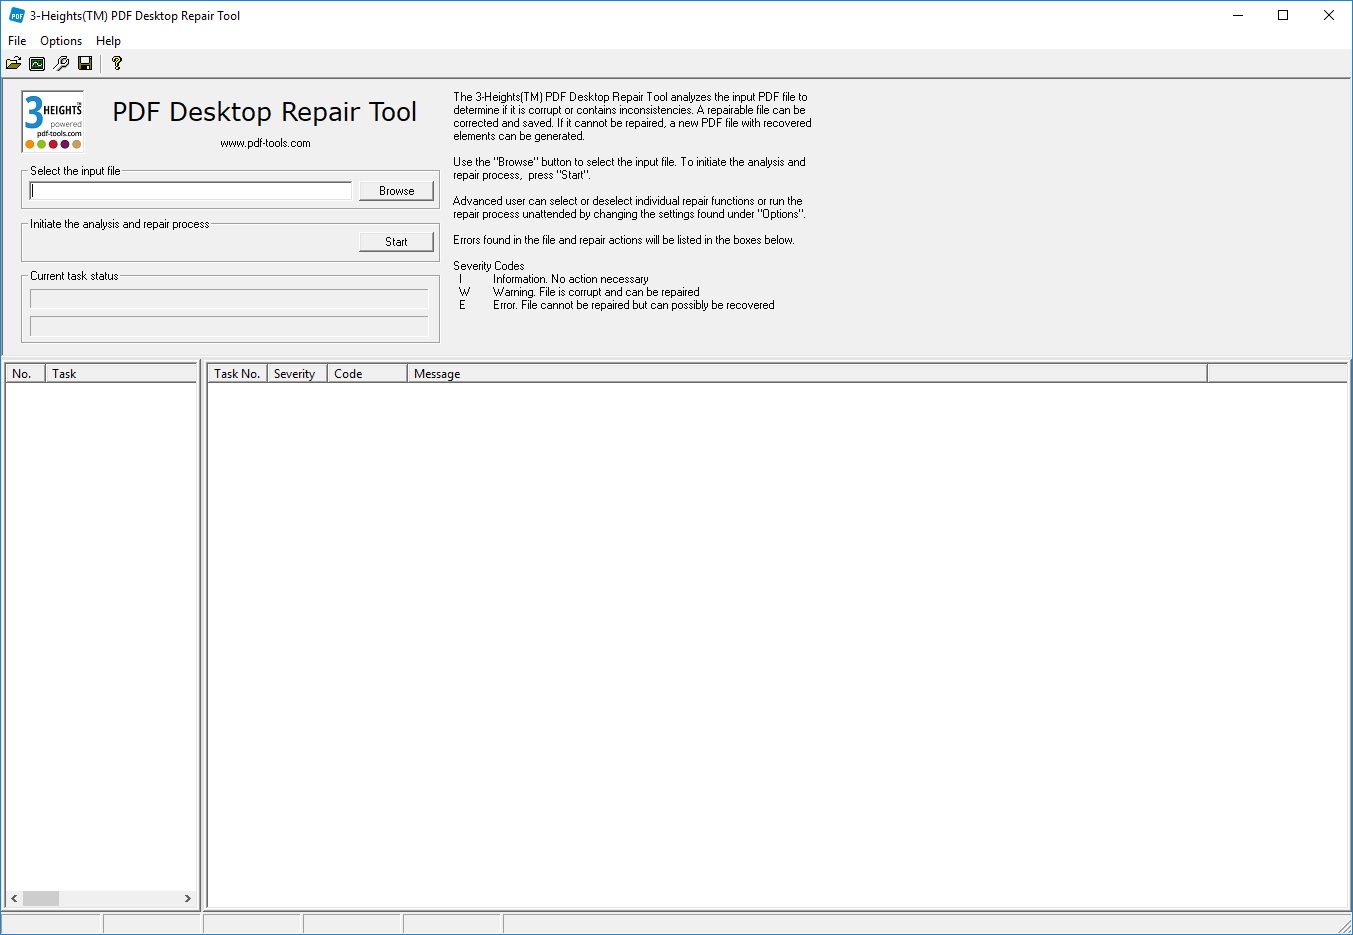 download the new version for mac 3-Heights PDF Desktop Analysis & Repair Tool 6.27.1.1